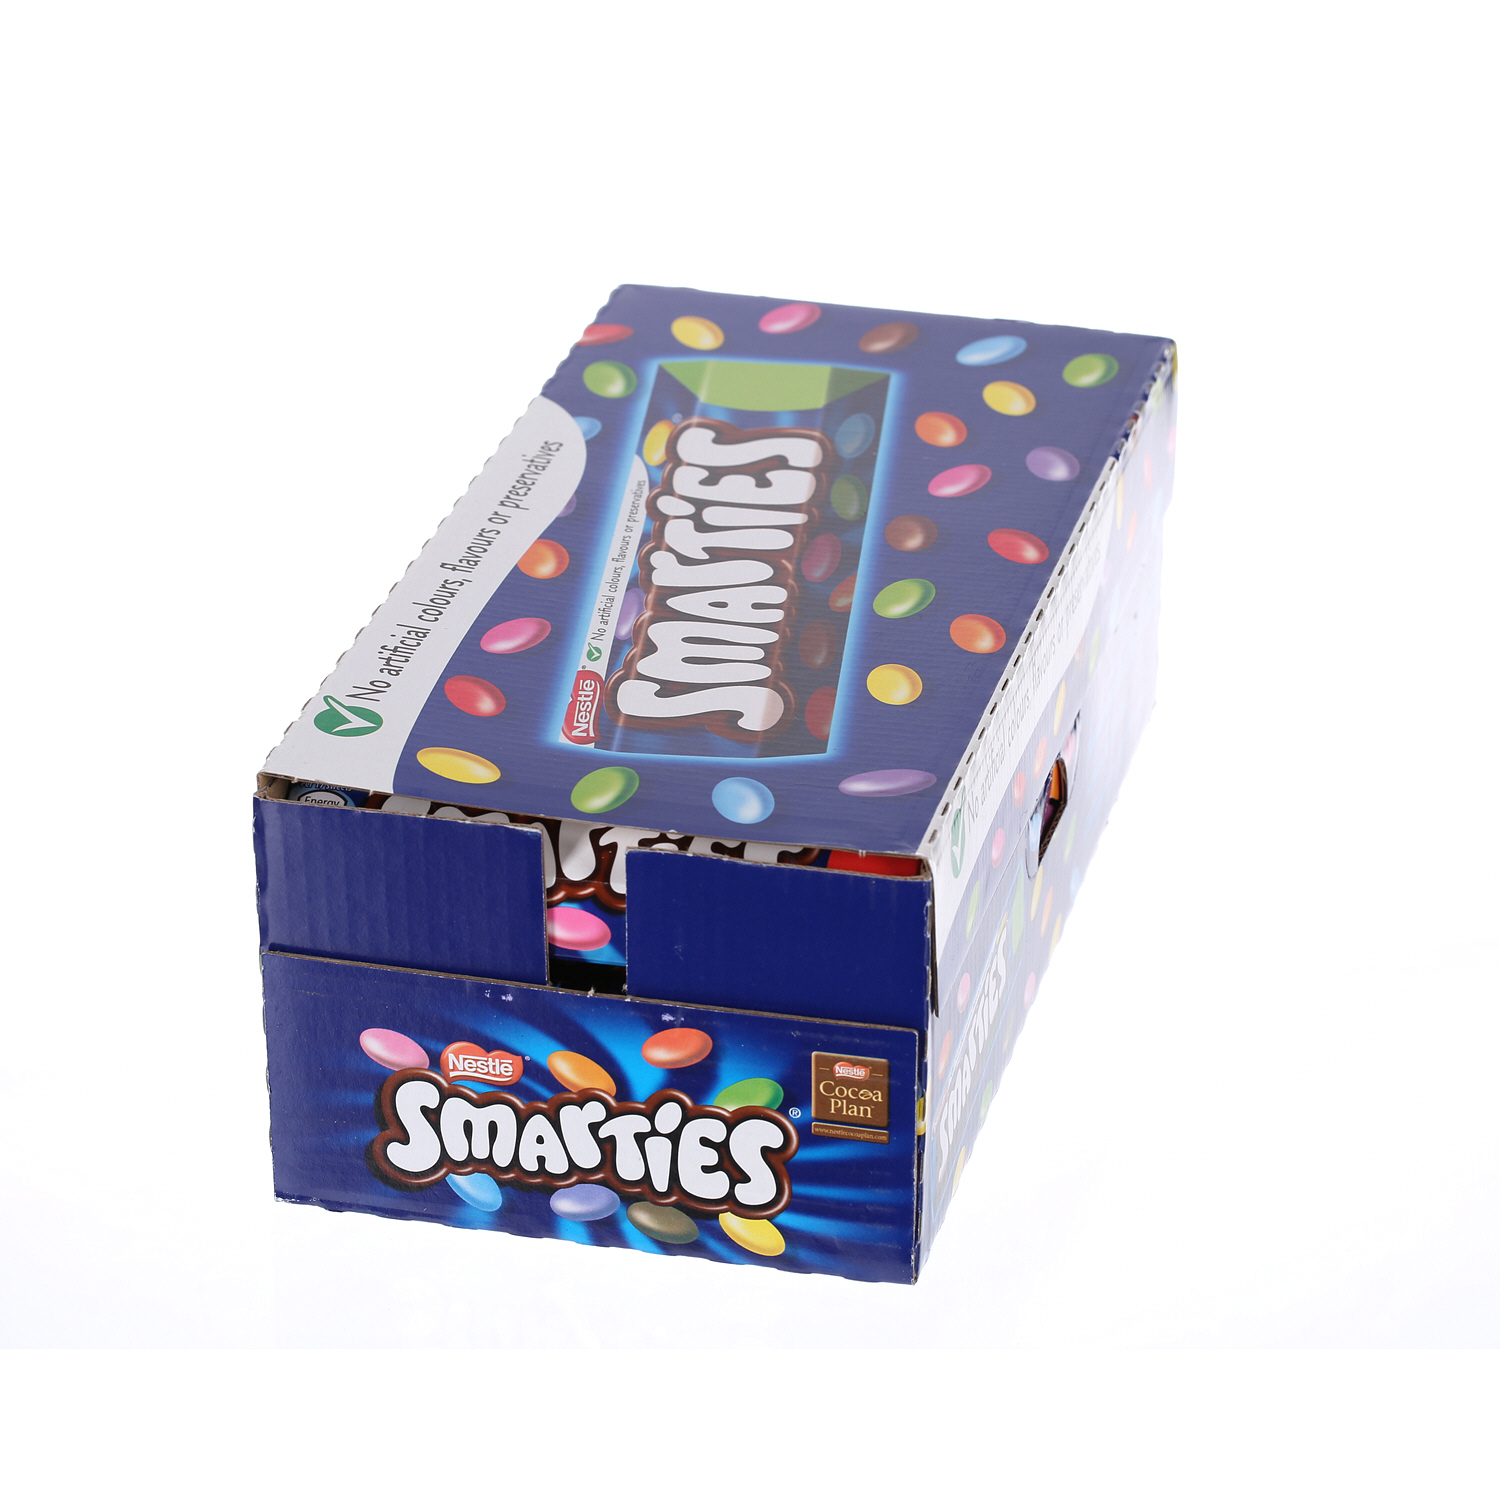 Nestlé Smarties Hexatube Chocolate 40gm × 24'S